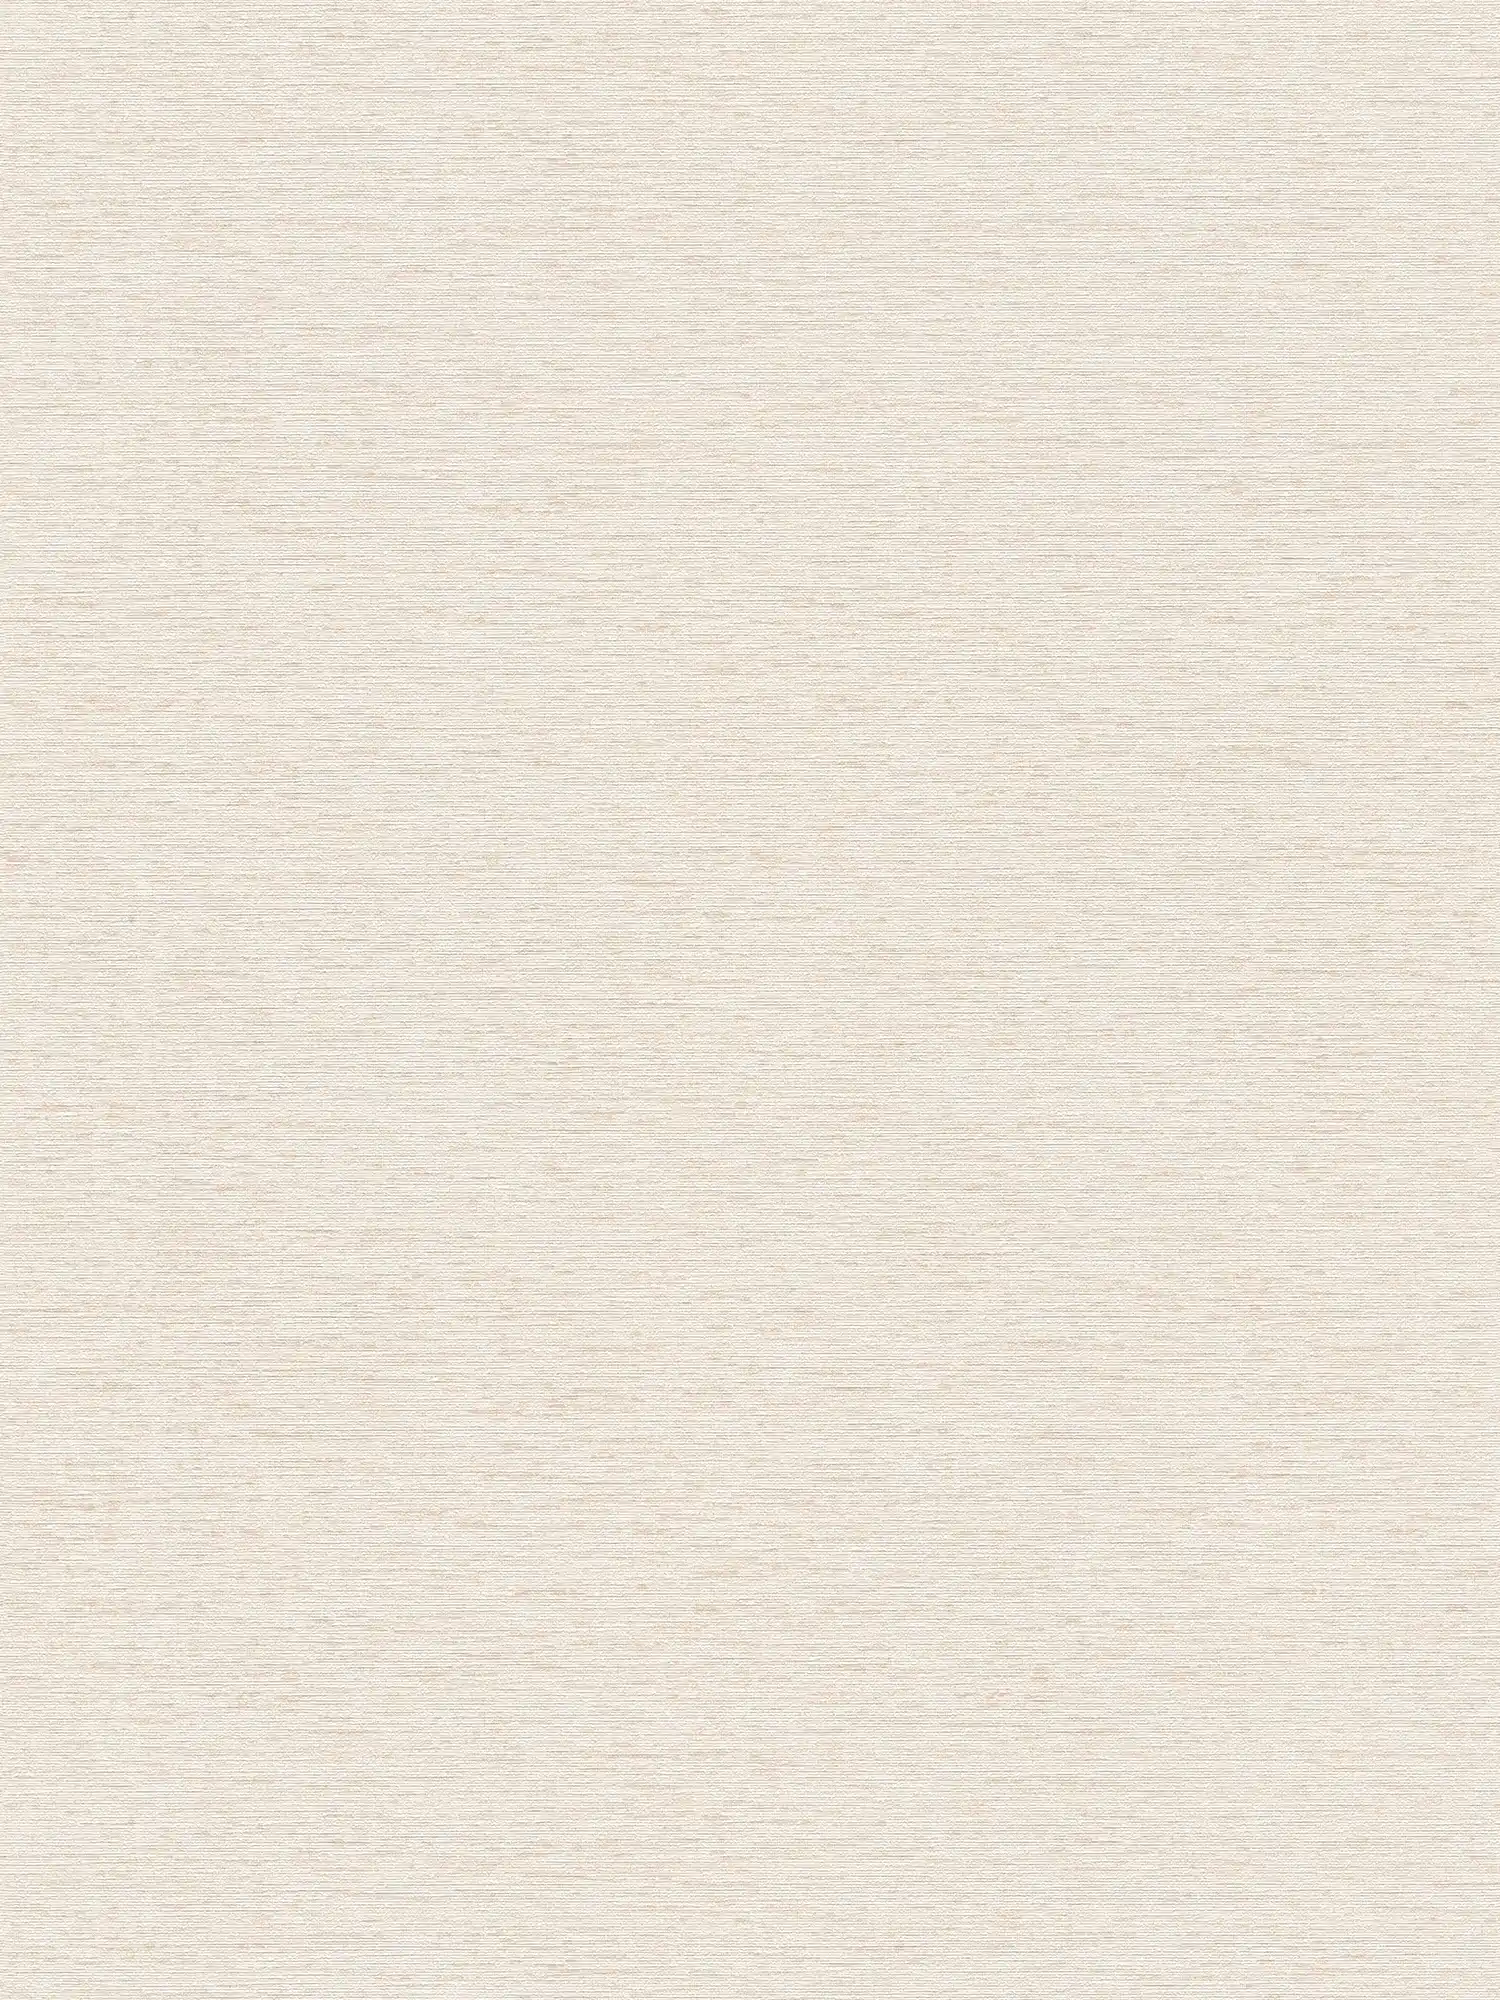 Papel pintado liso con estructura de tela, mate - crema, blanco, beige
